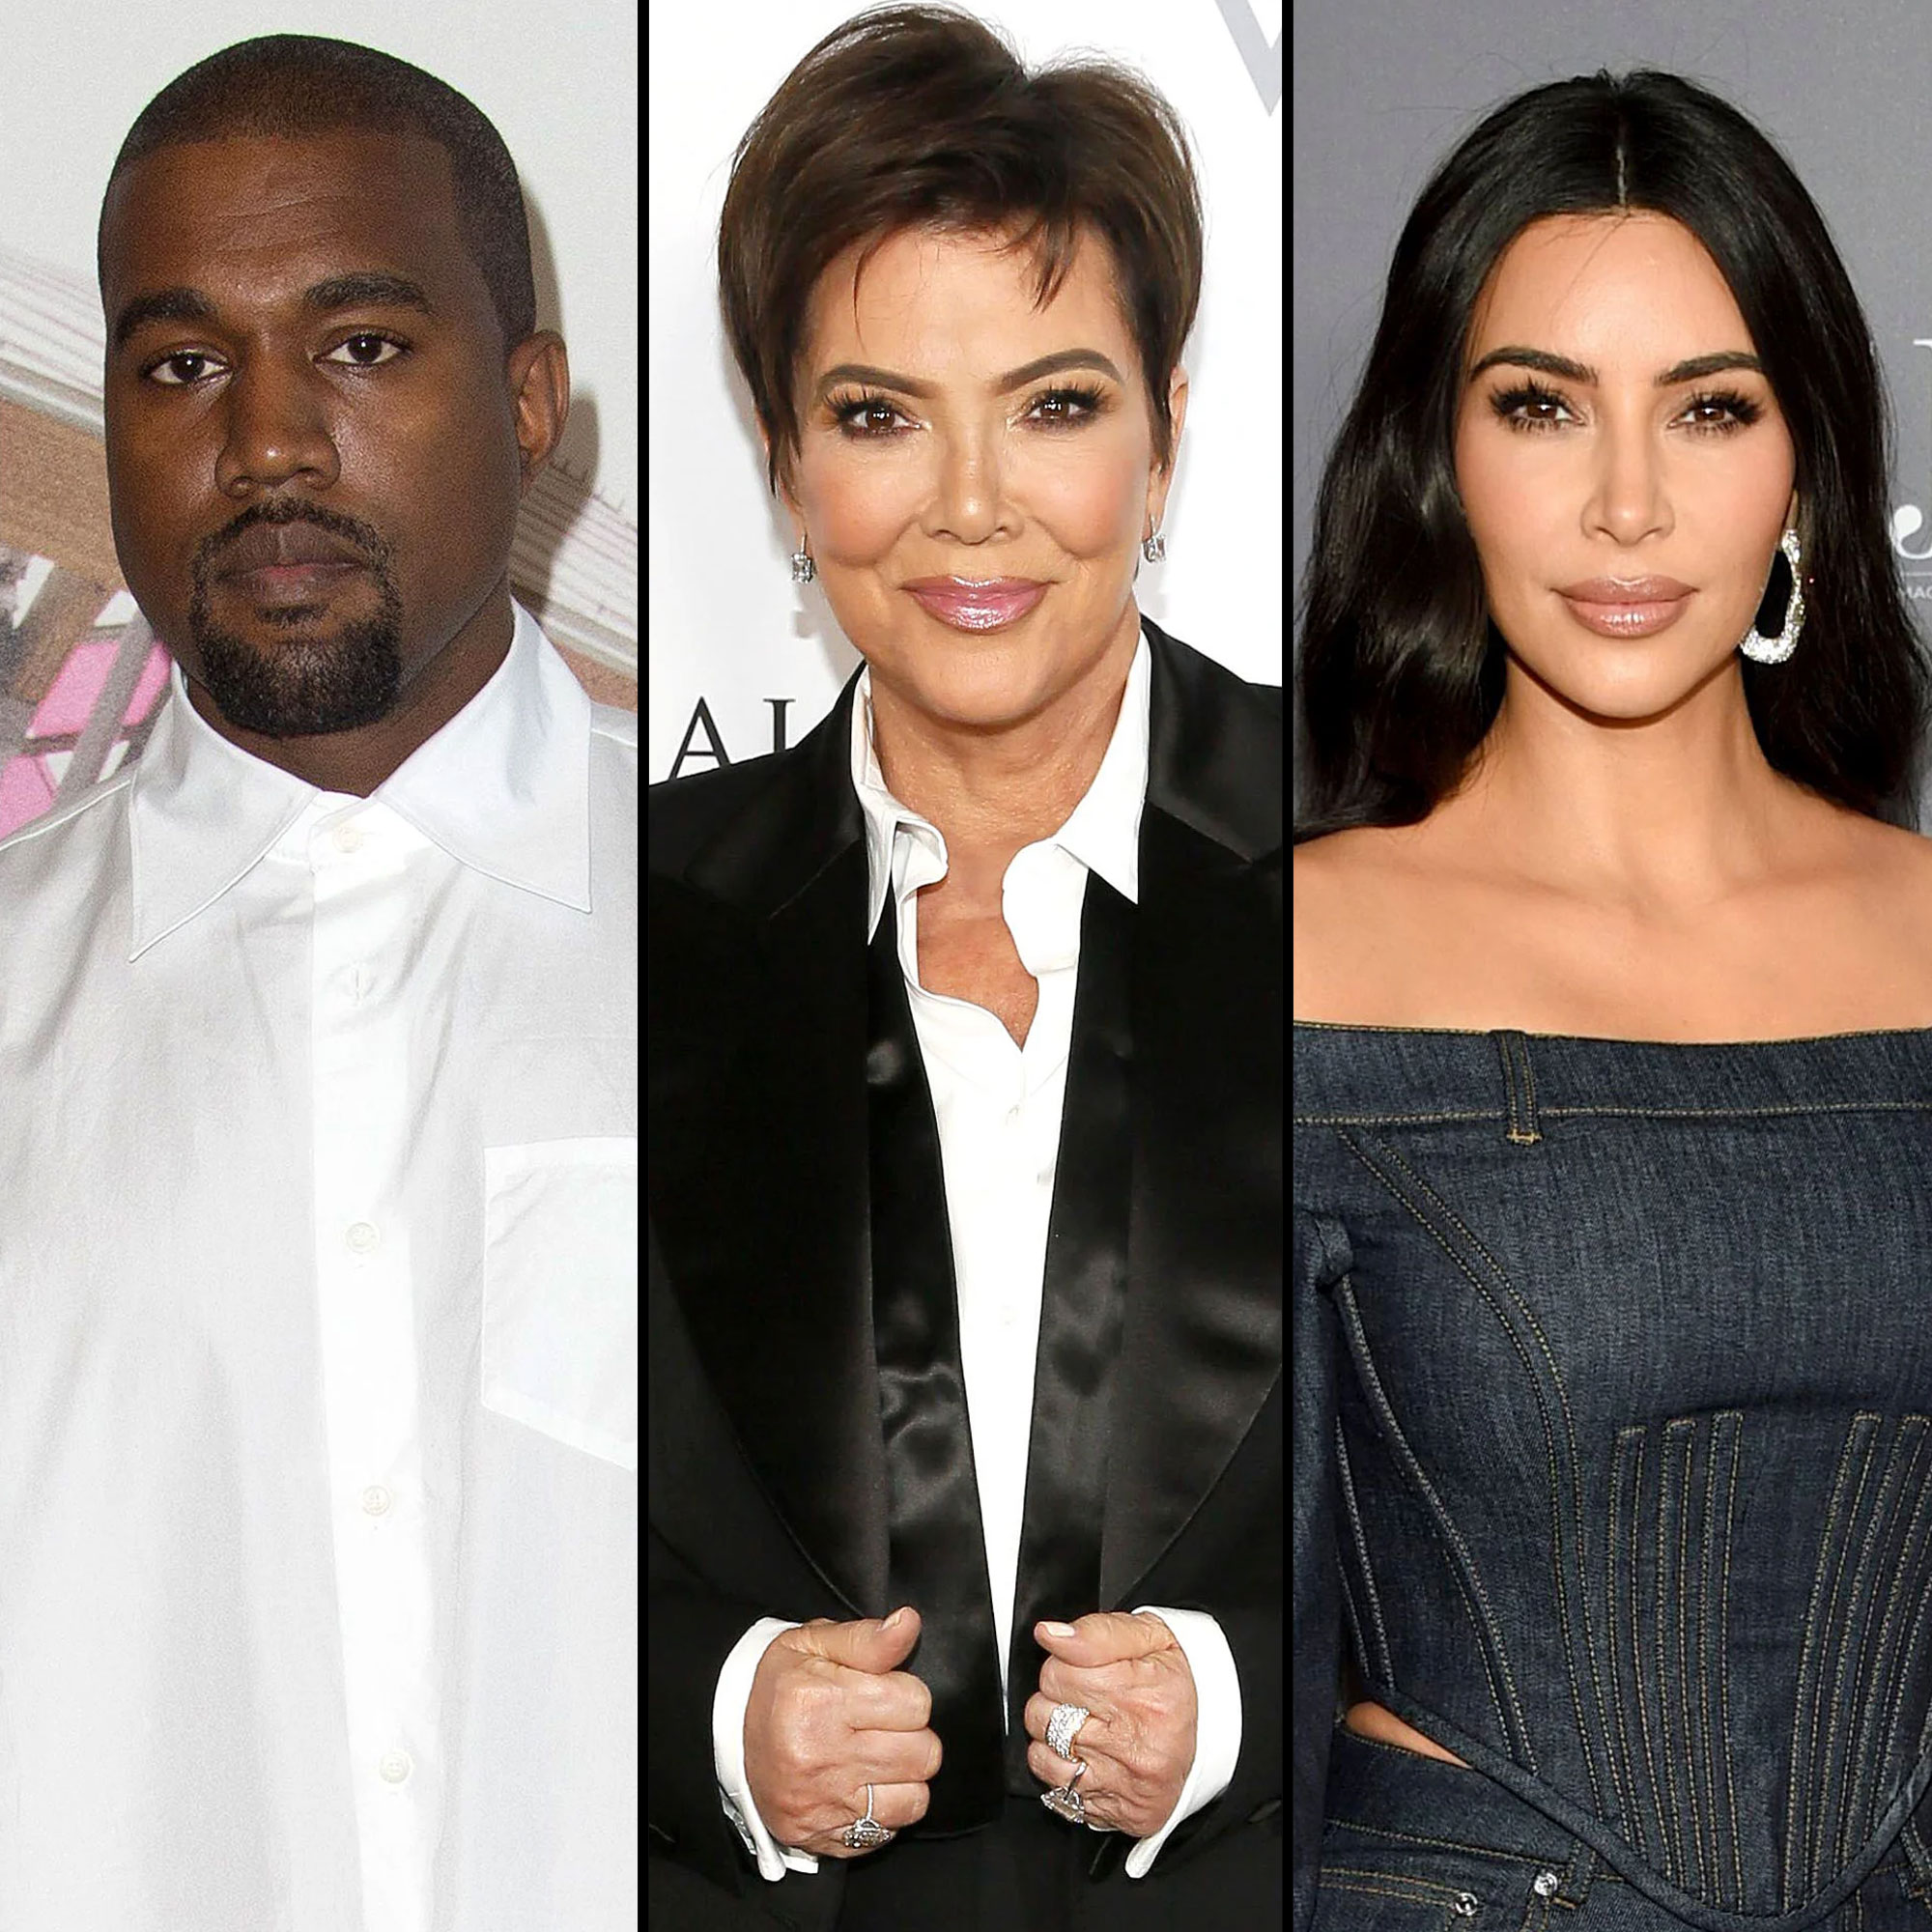 Kim Kardashian Porn Star - Kanye West Calls Out Kris Jenner, Claims Porn 'Destroyed' Family